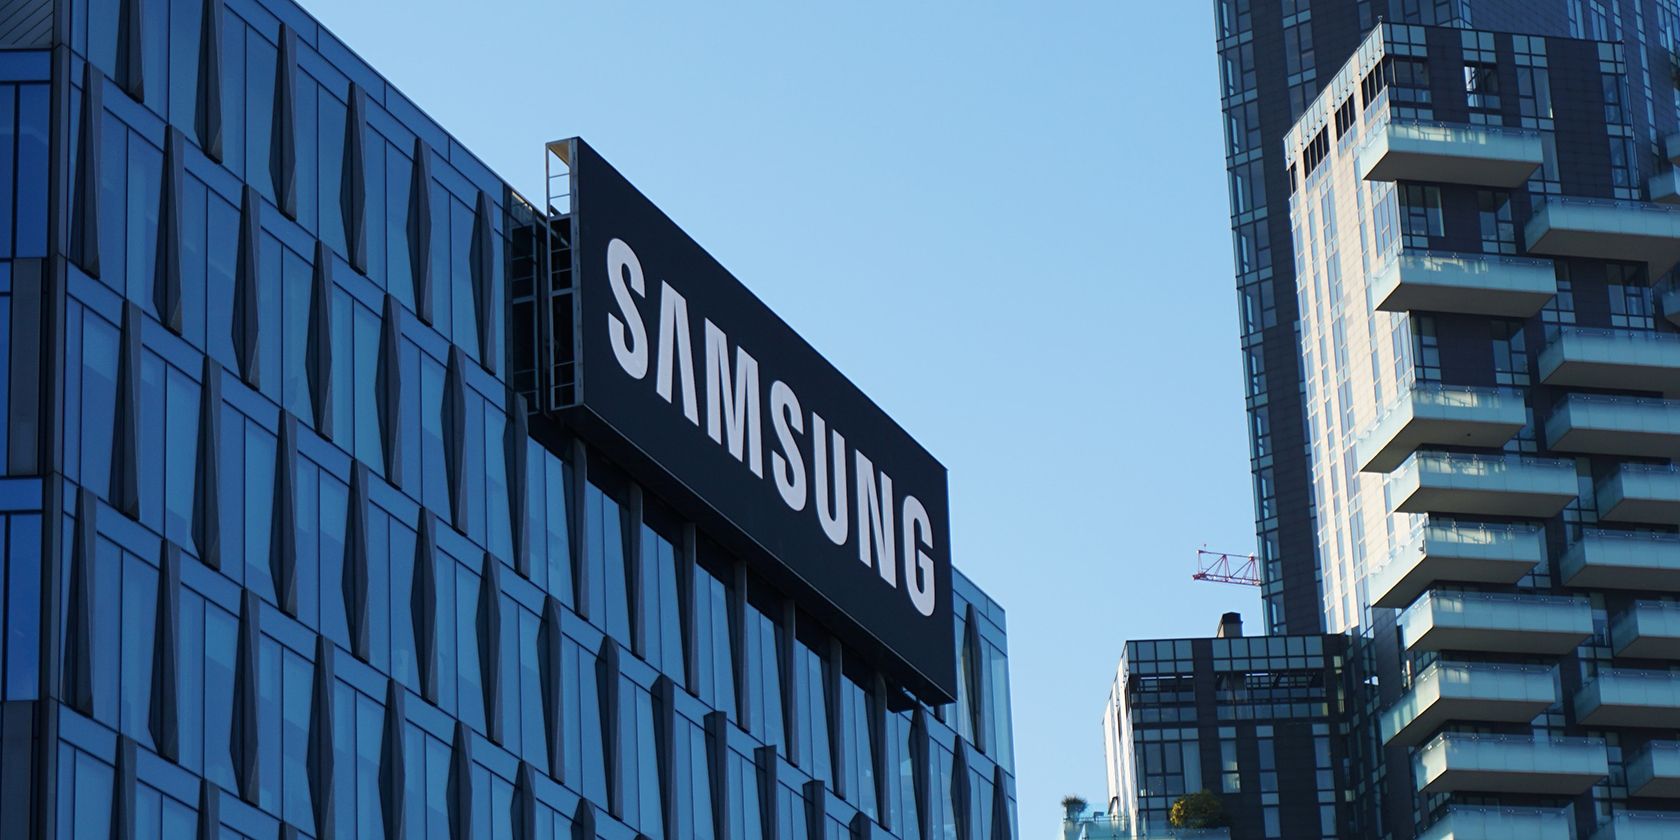 Samsung logo on the building